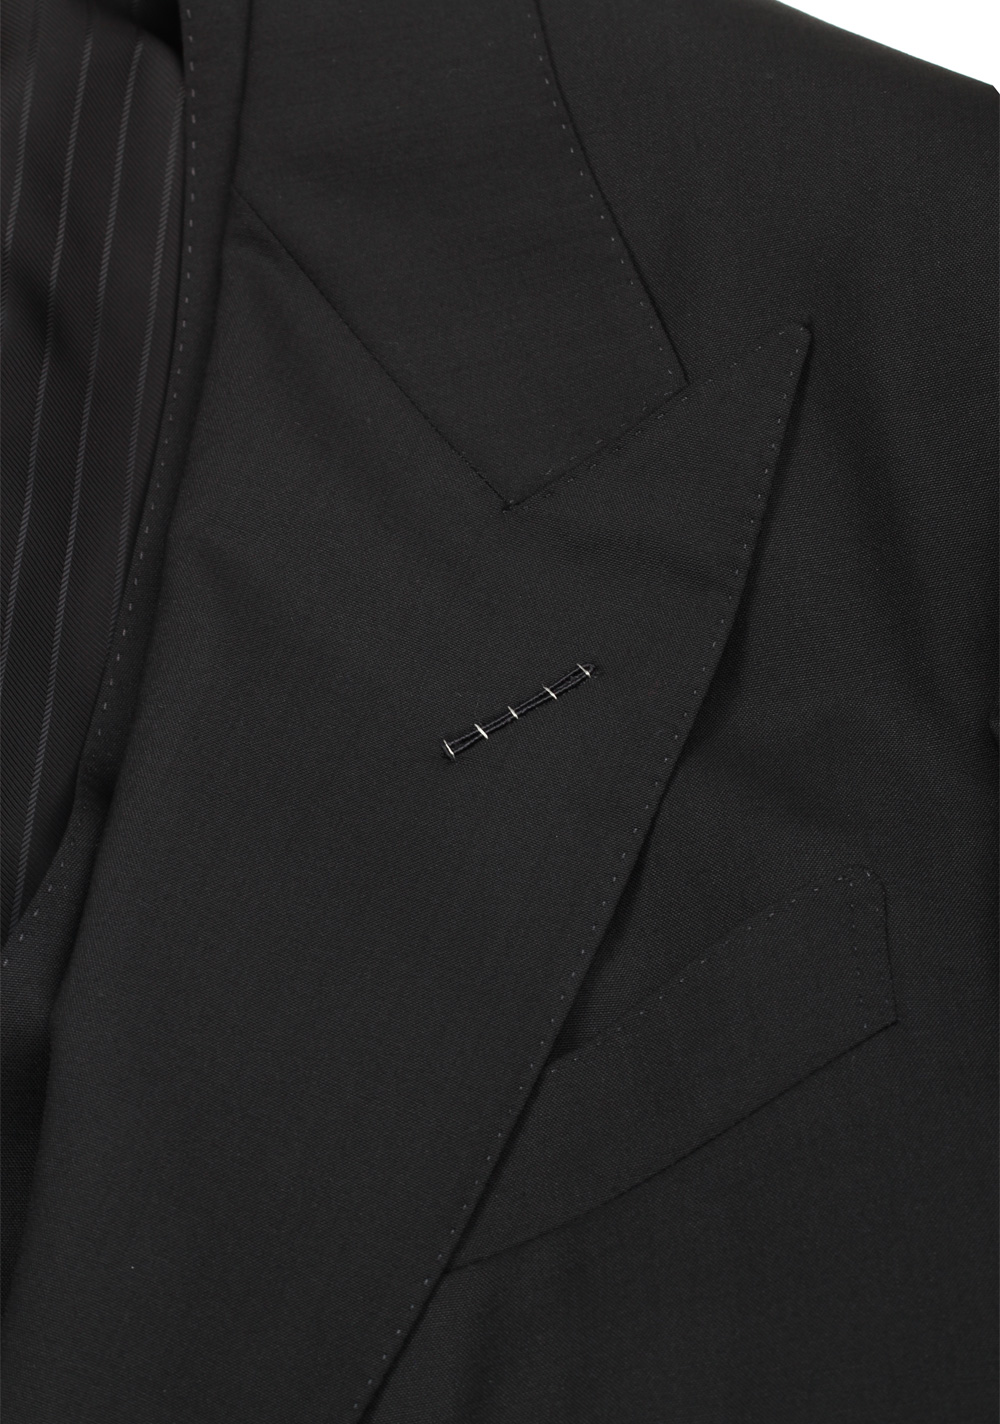 TOM FORD Windsor Black 3 Piece Suit Size 50 / 40R U.S. Wool Fit A | Costume Limité